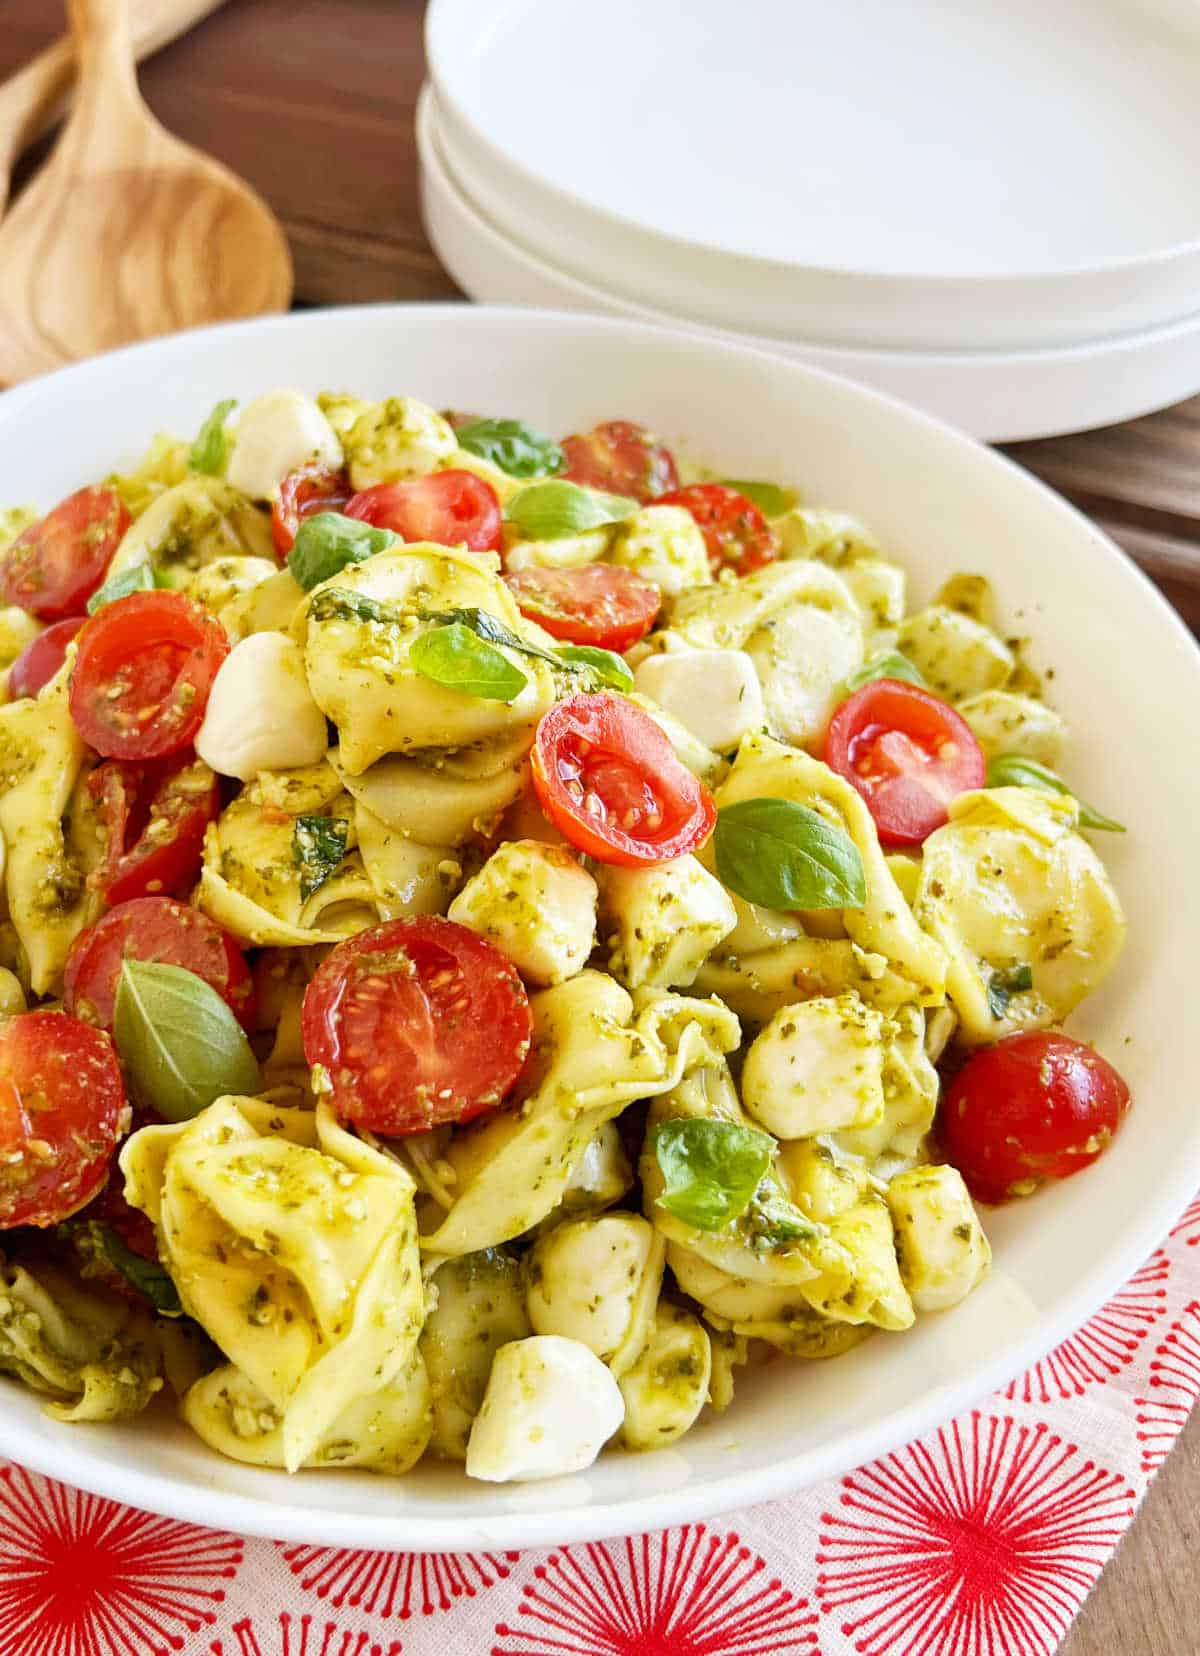 tortellini pesto pasta salad in serving bowl on table.